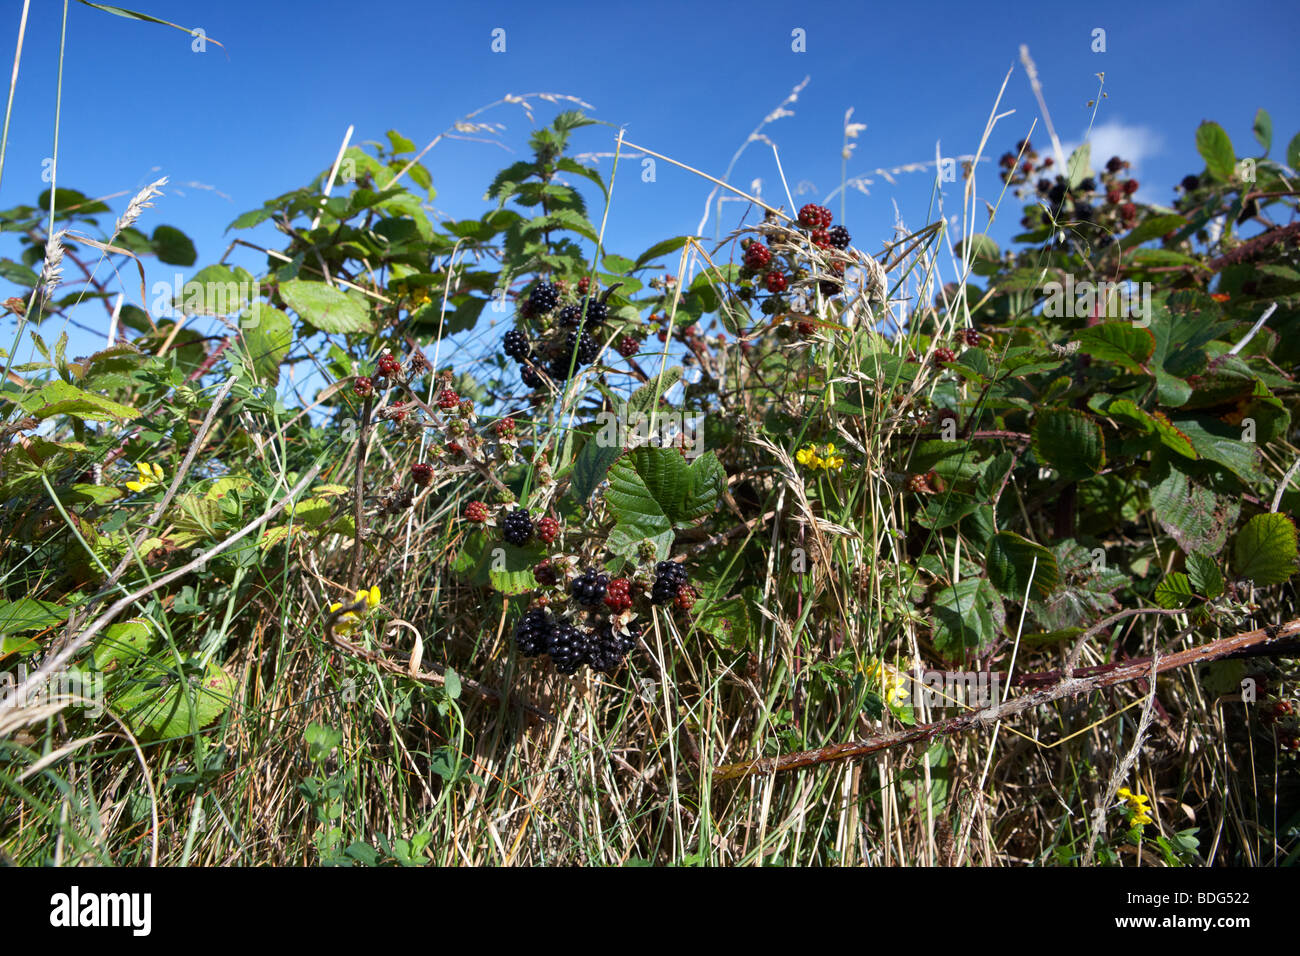 common blackberry rubus fruticosus blackberries various stages growing on a wild bramble bush hedgerow in ireland Stock Photo